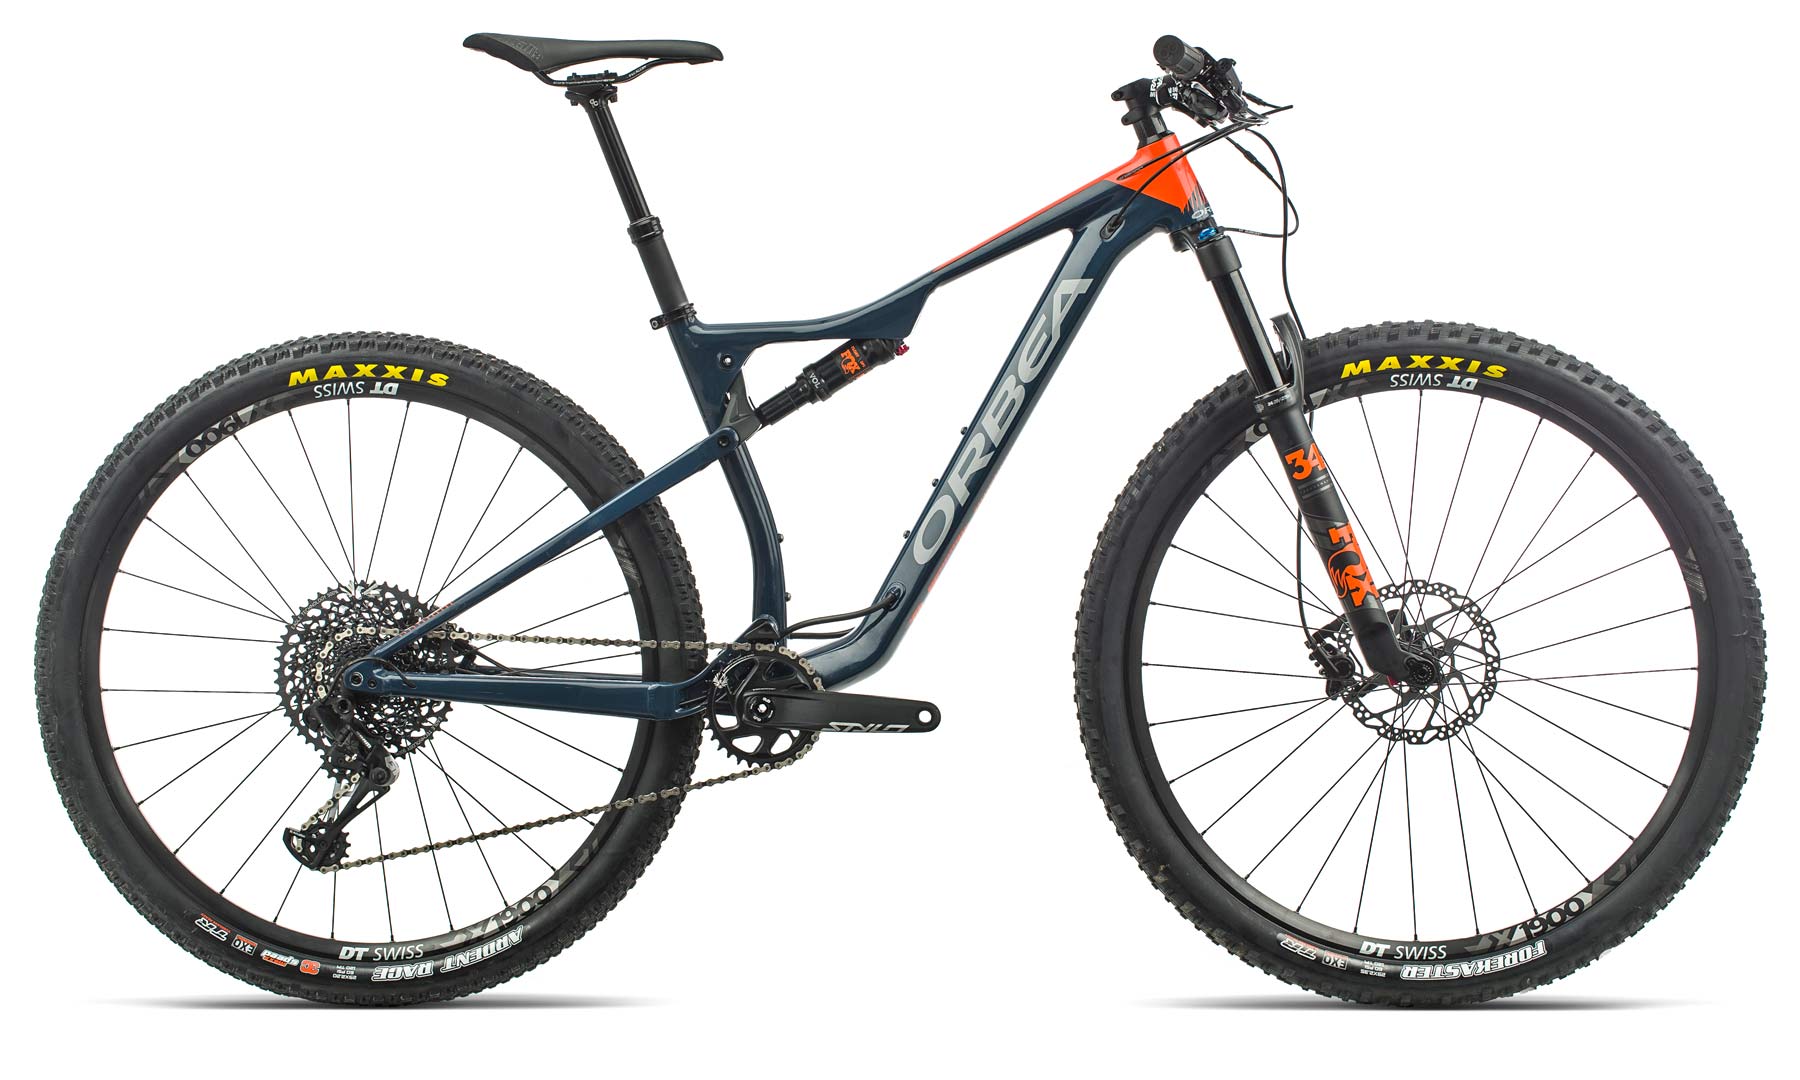 2020 Orbea Oiz H ally XC bike, affordable aluminum cross-country trail mountain bike